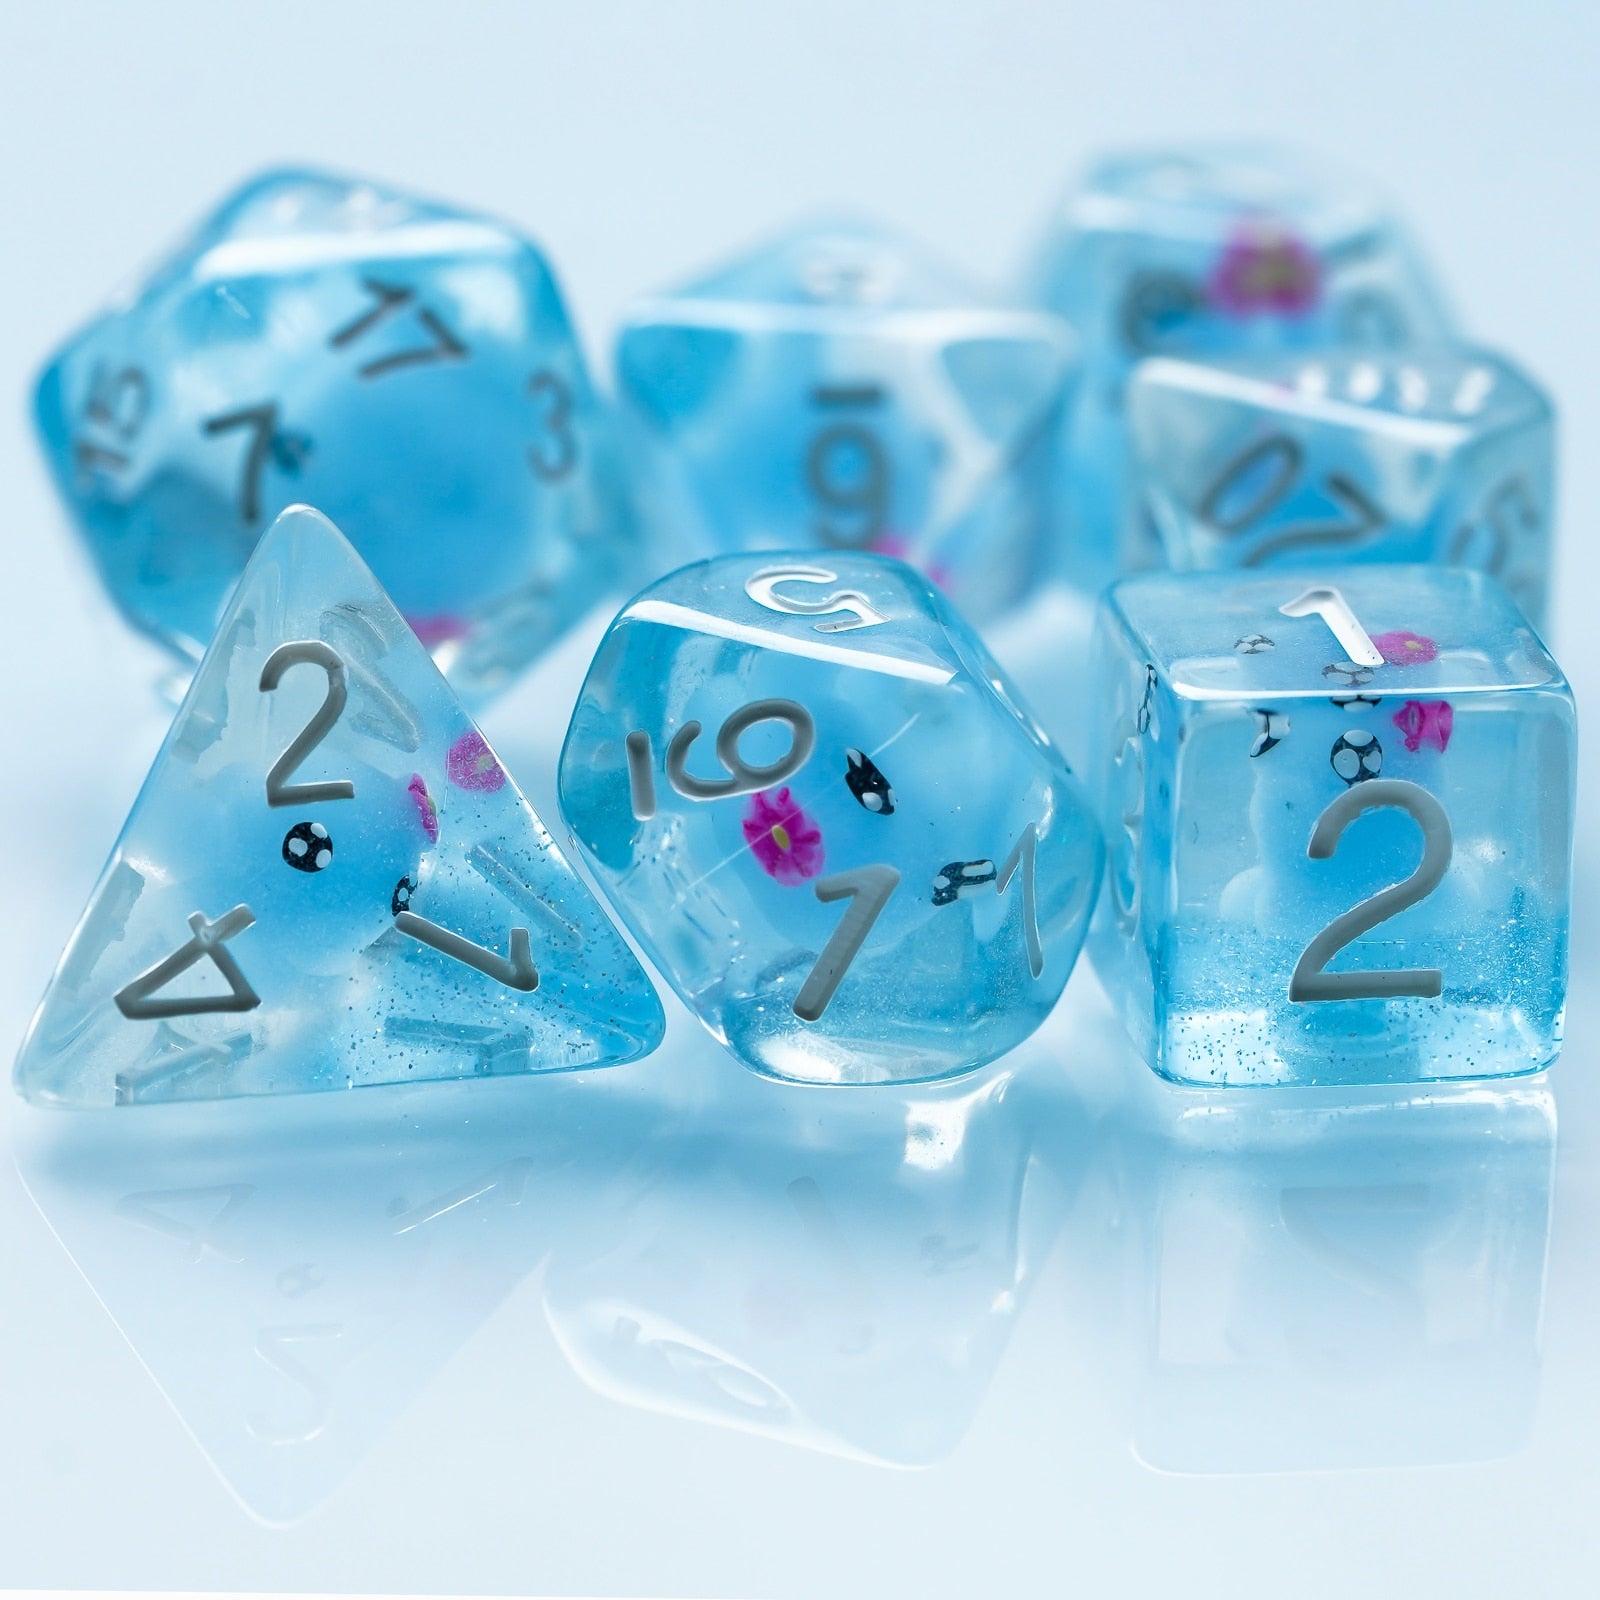 d4, d10 and d6 blue octopus dice